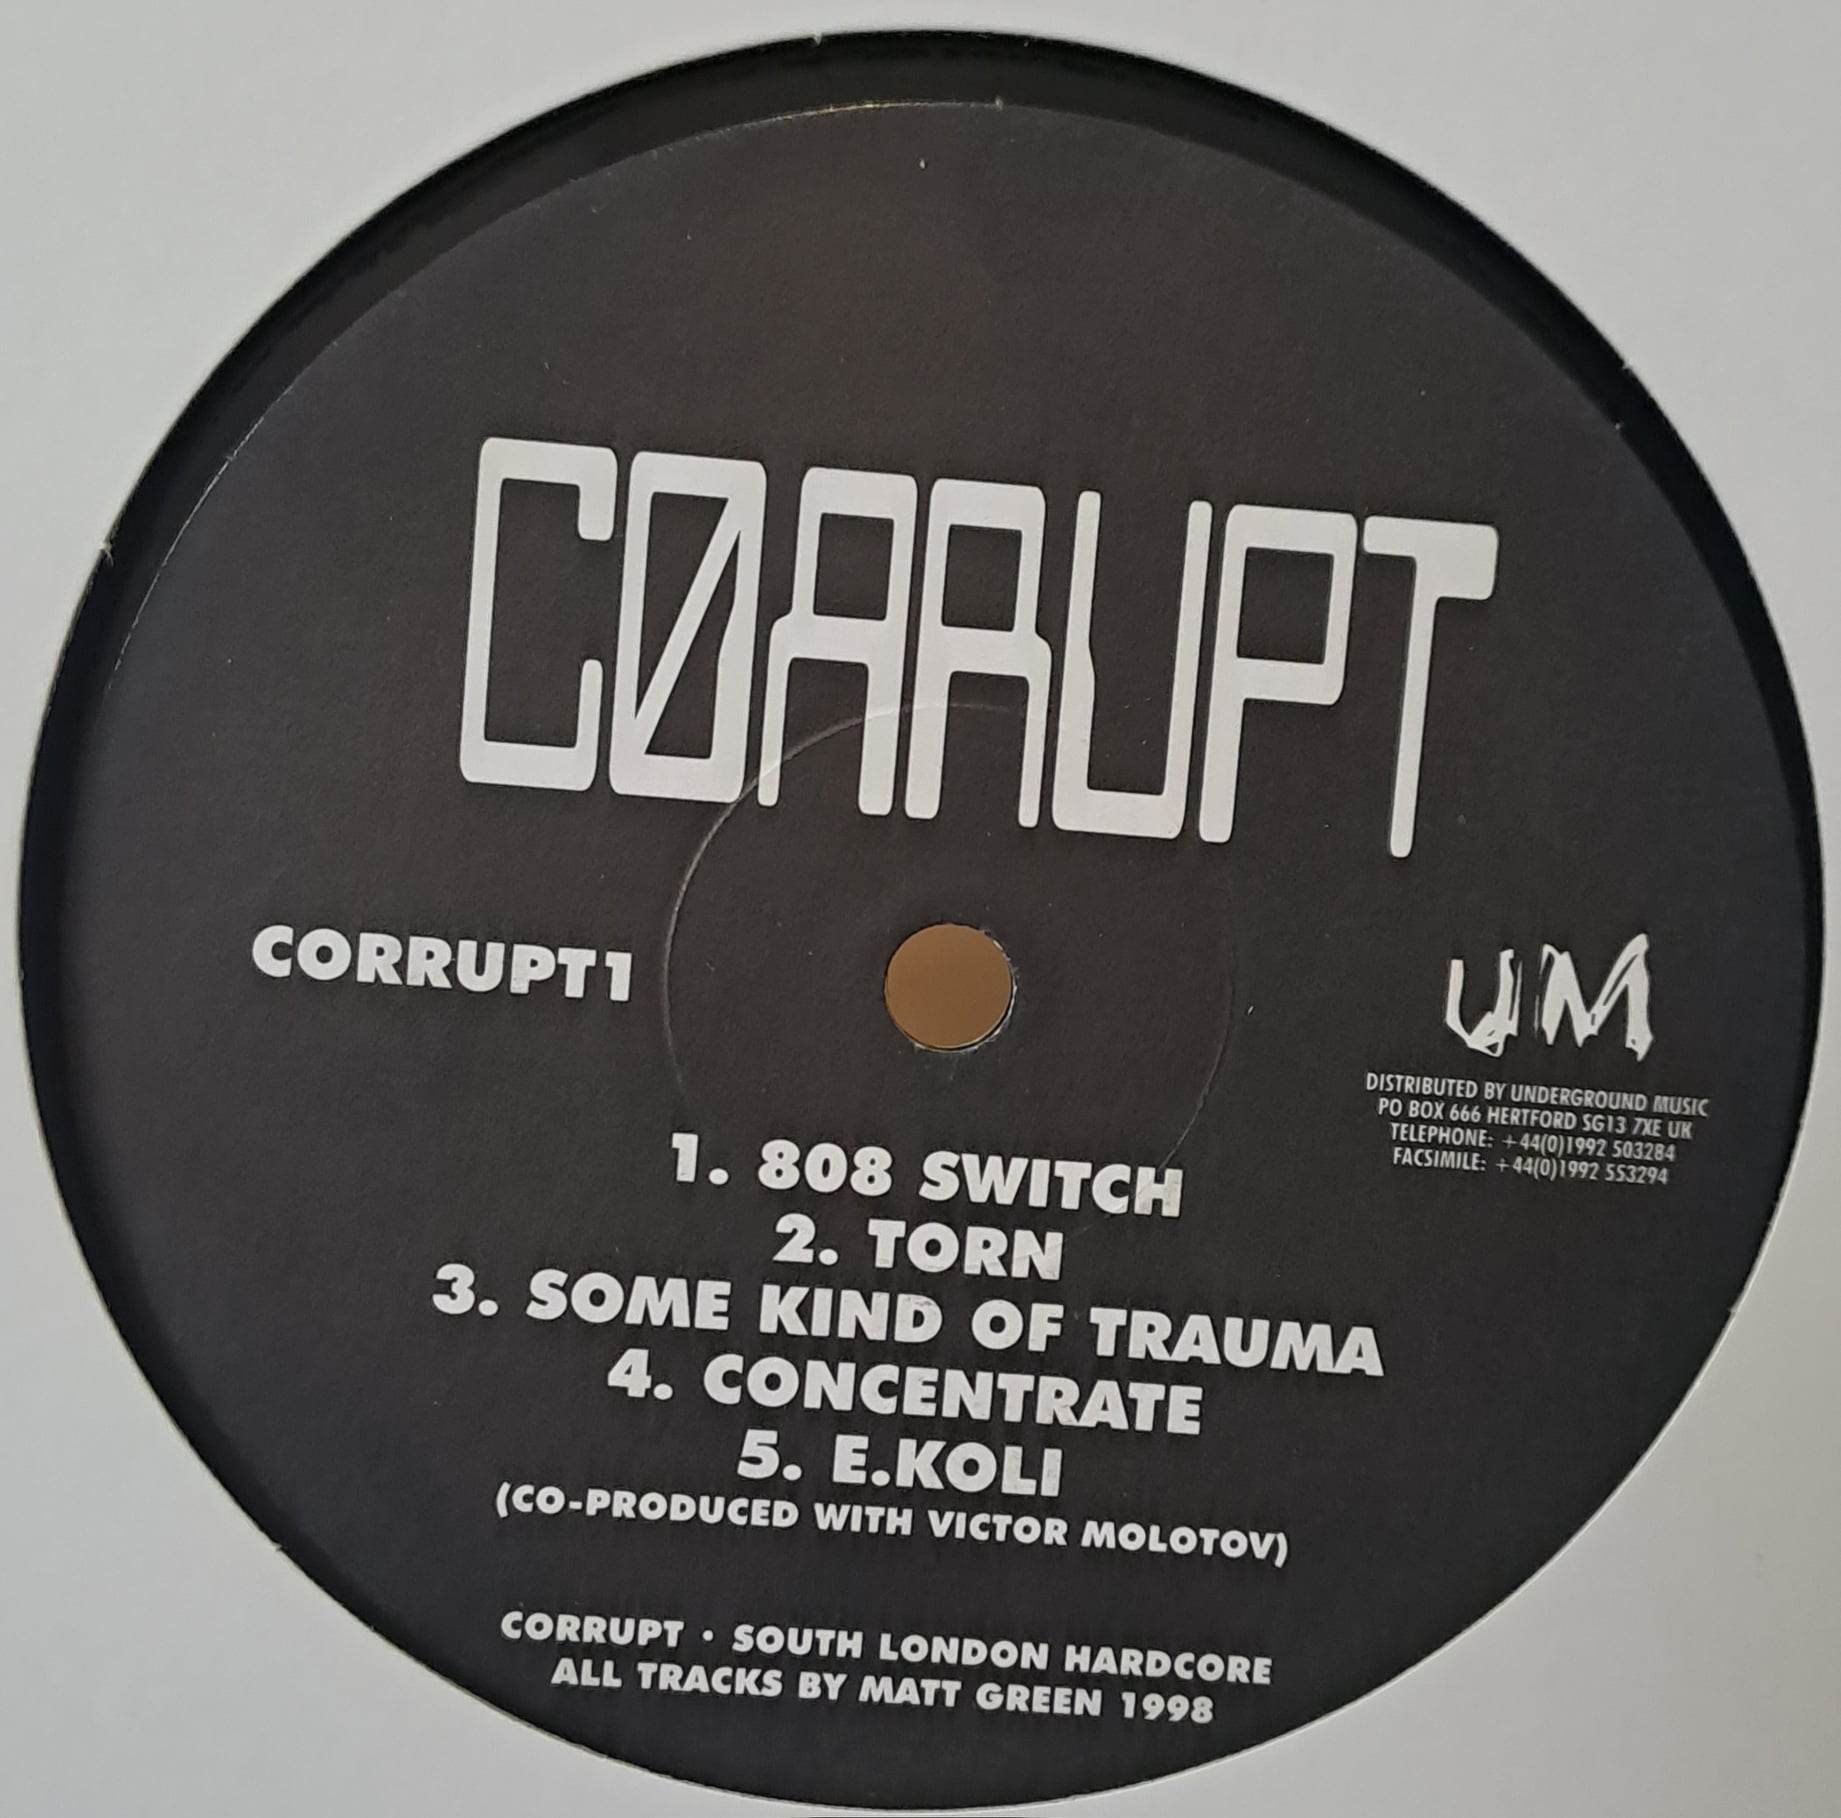 1) Corrupt 1 - vinyle hardcore